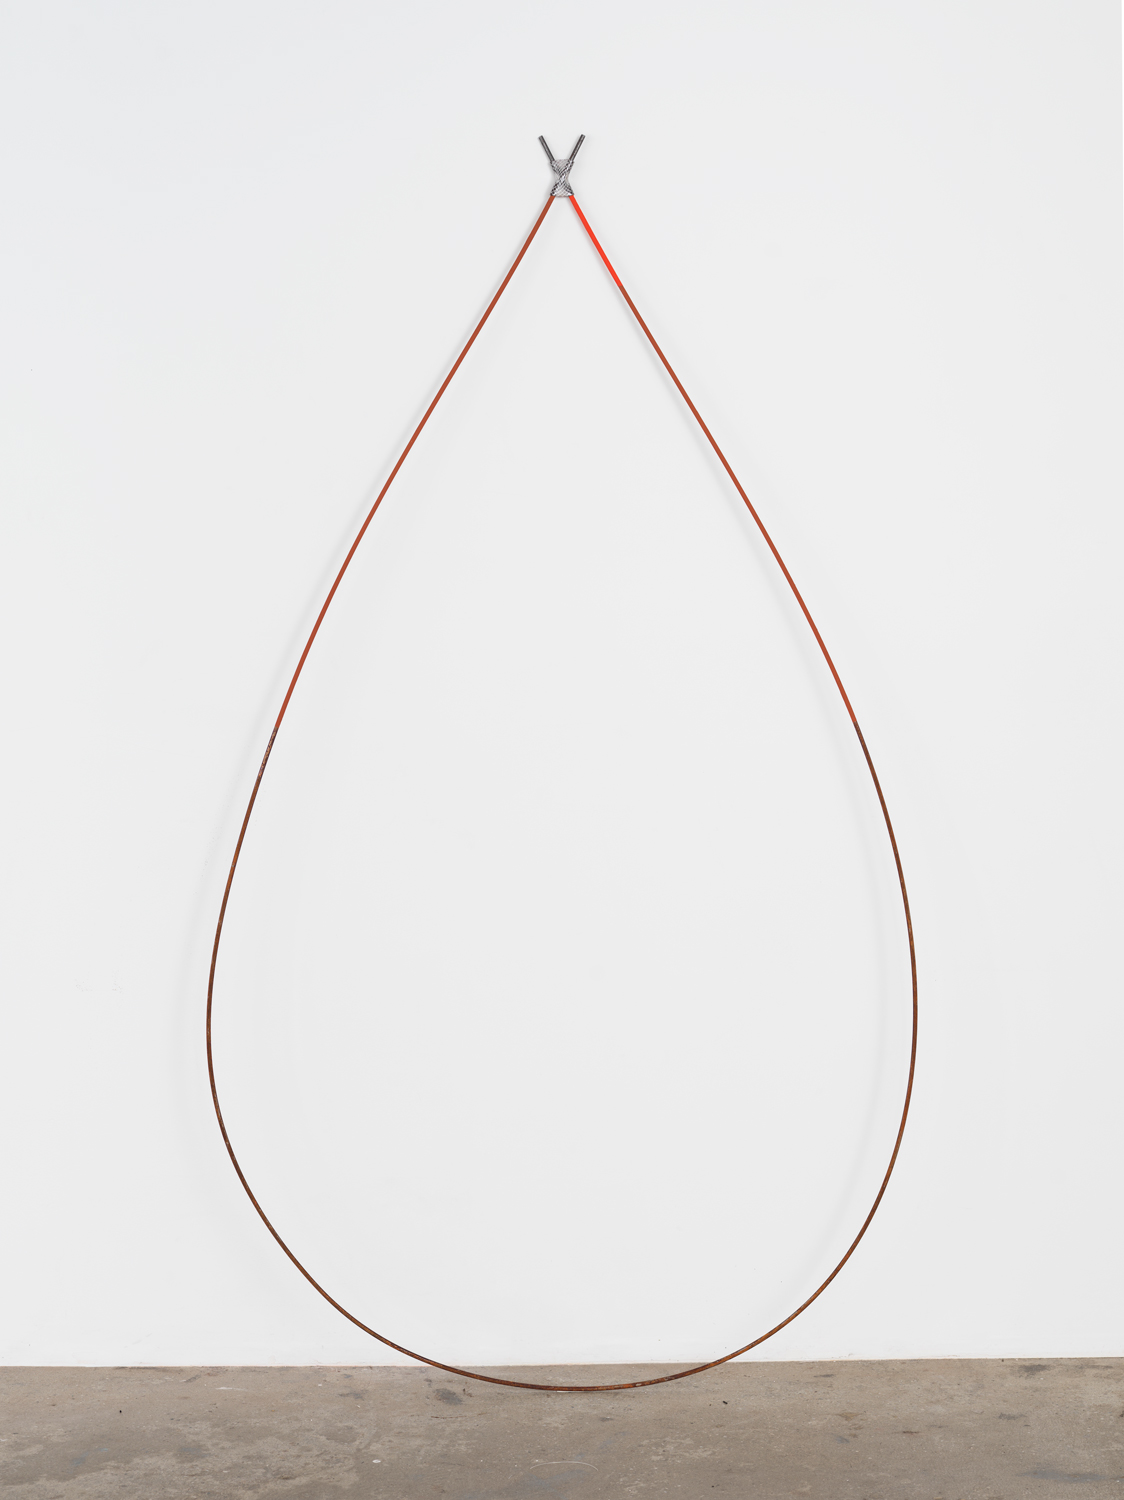 Linnea Kniaz, Framework 12, 2019, steel rod, acrylic, vinyl tubing, 67.5h x 38w in.